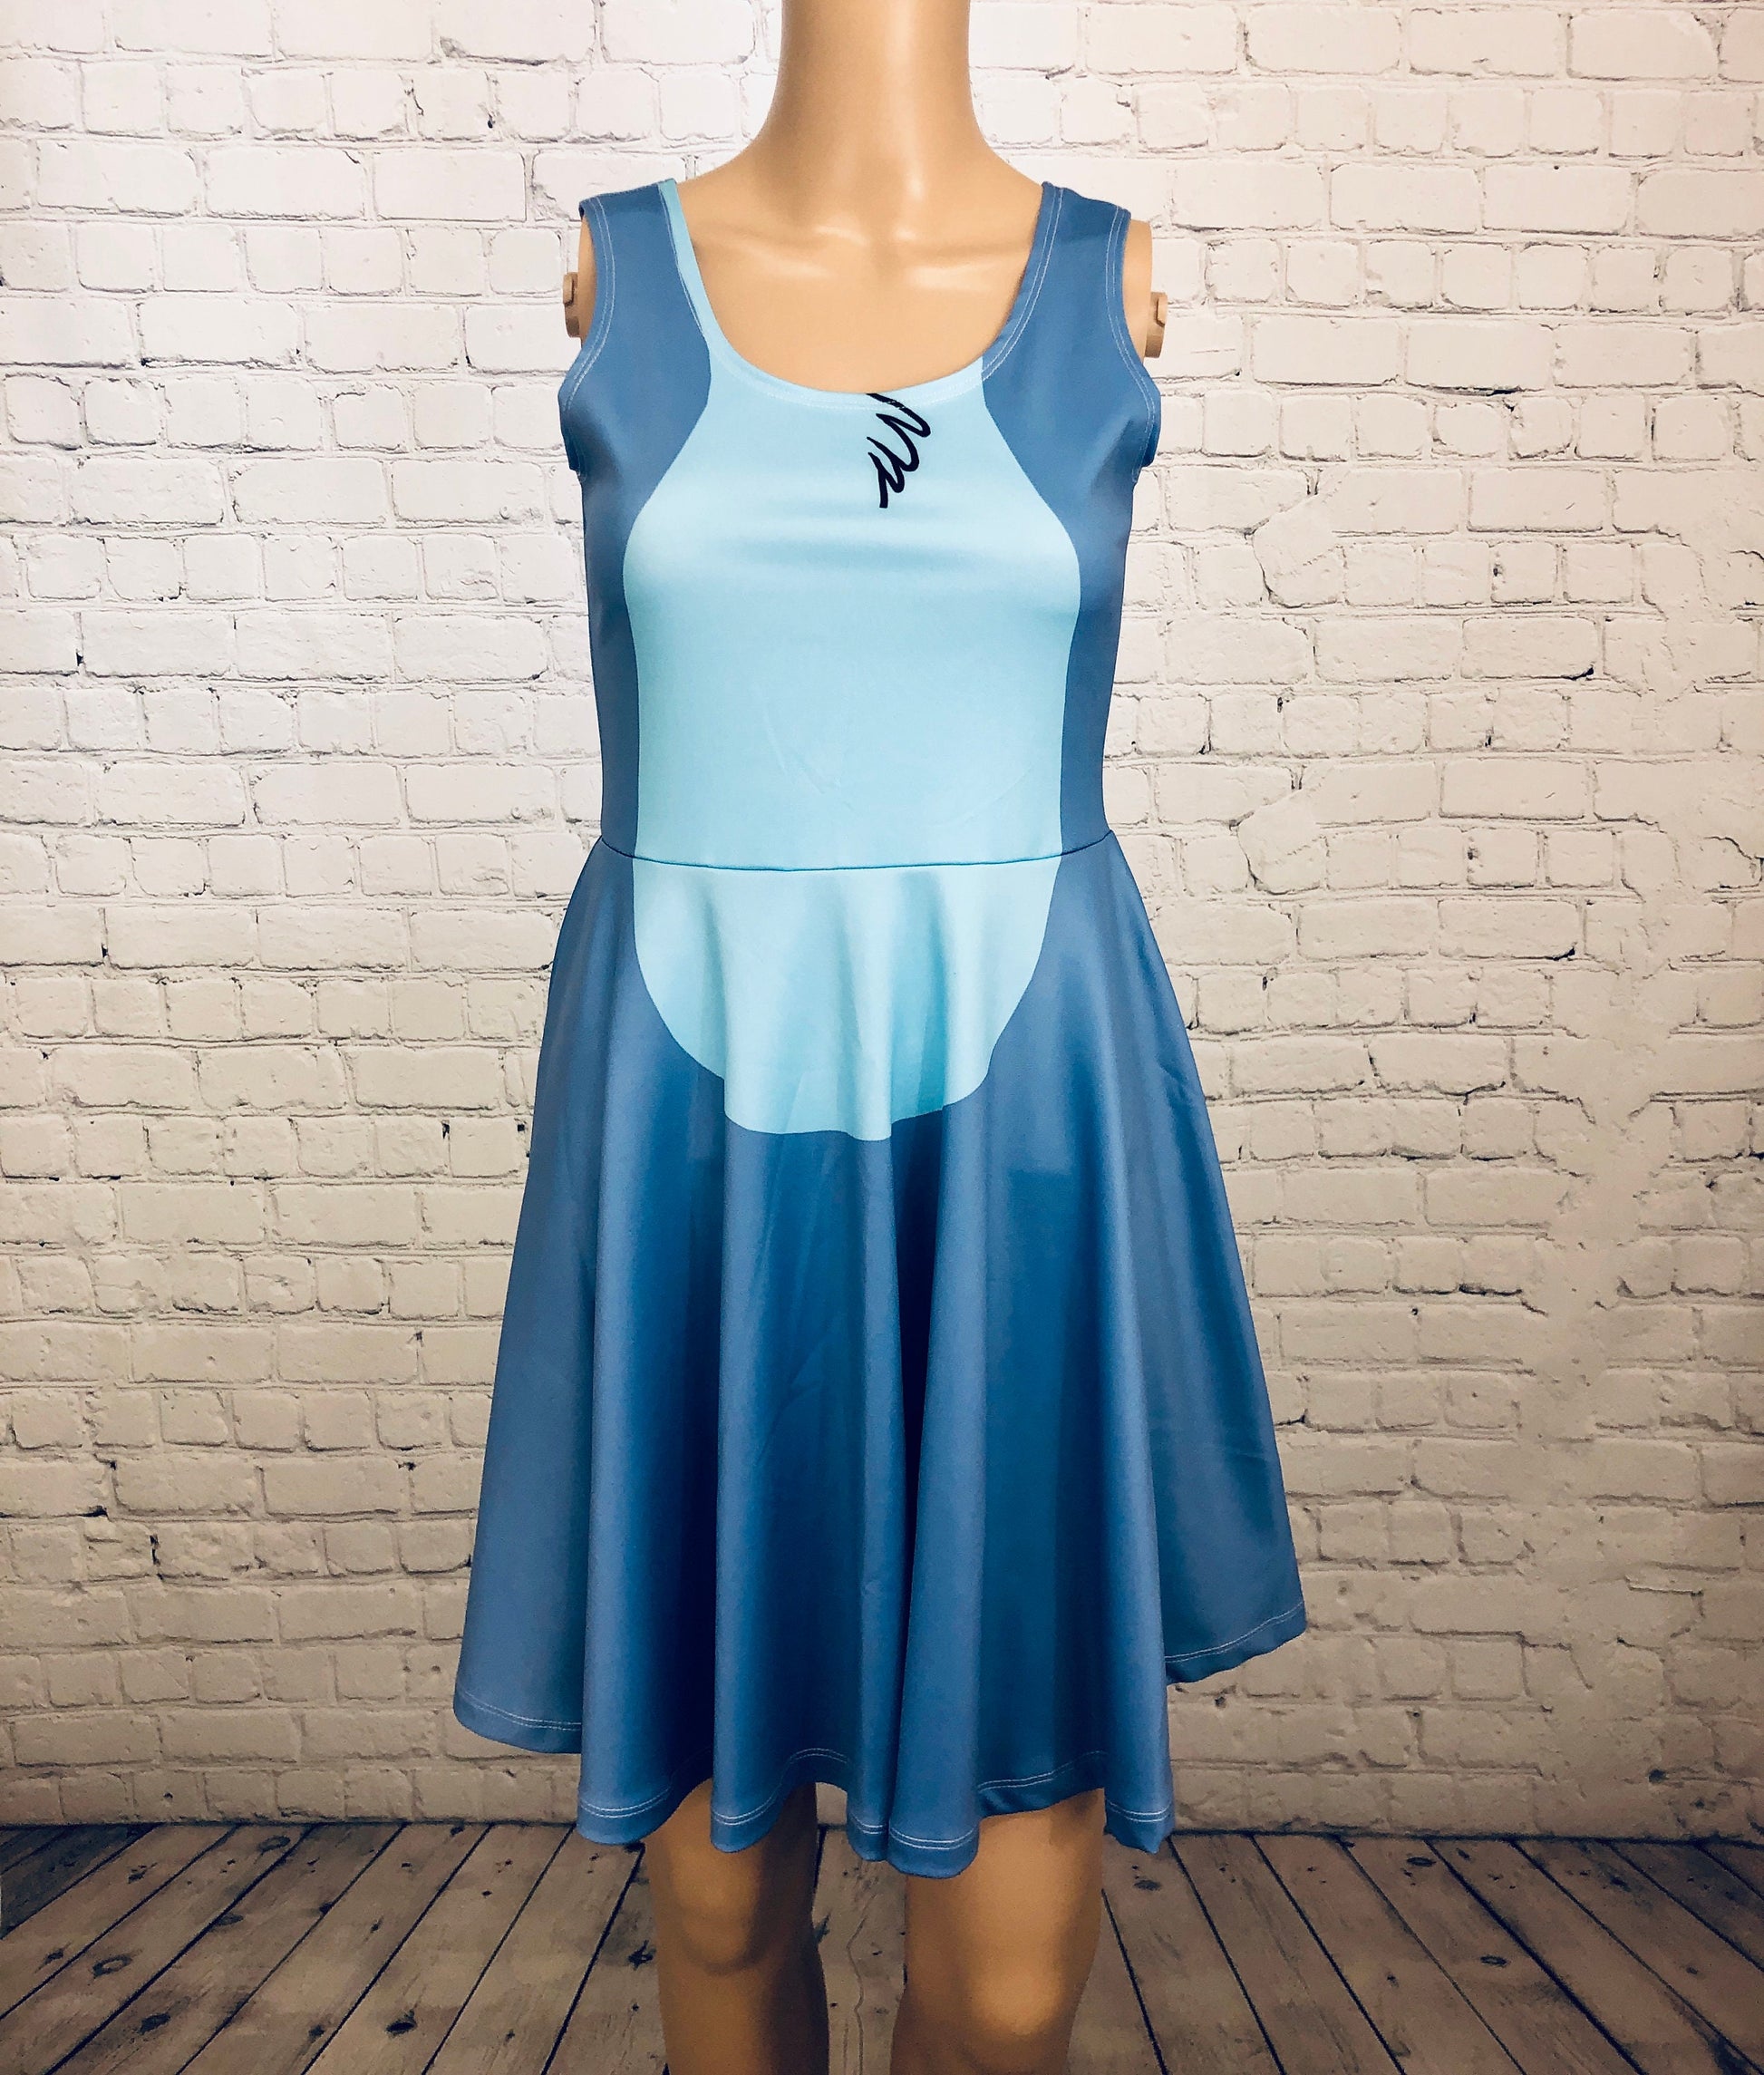 RUSH ORDER: Stitch Lilo and Stitch Inspired Skater Dress